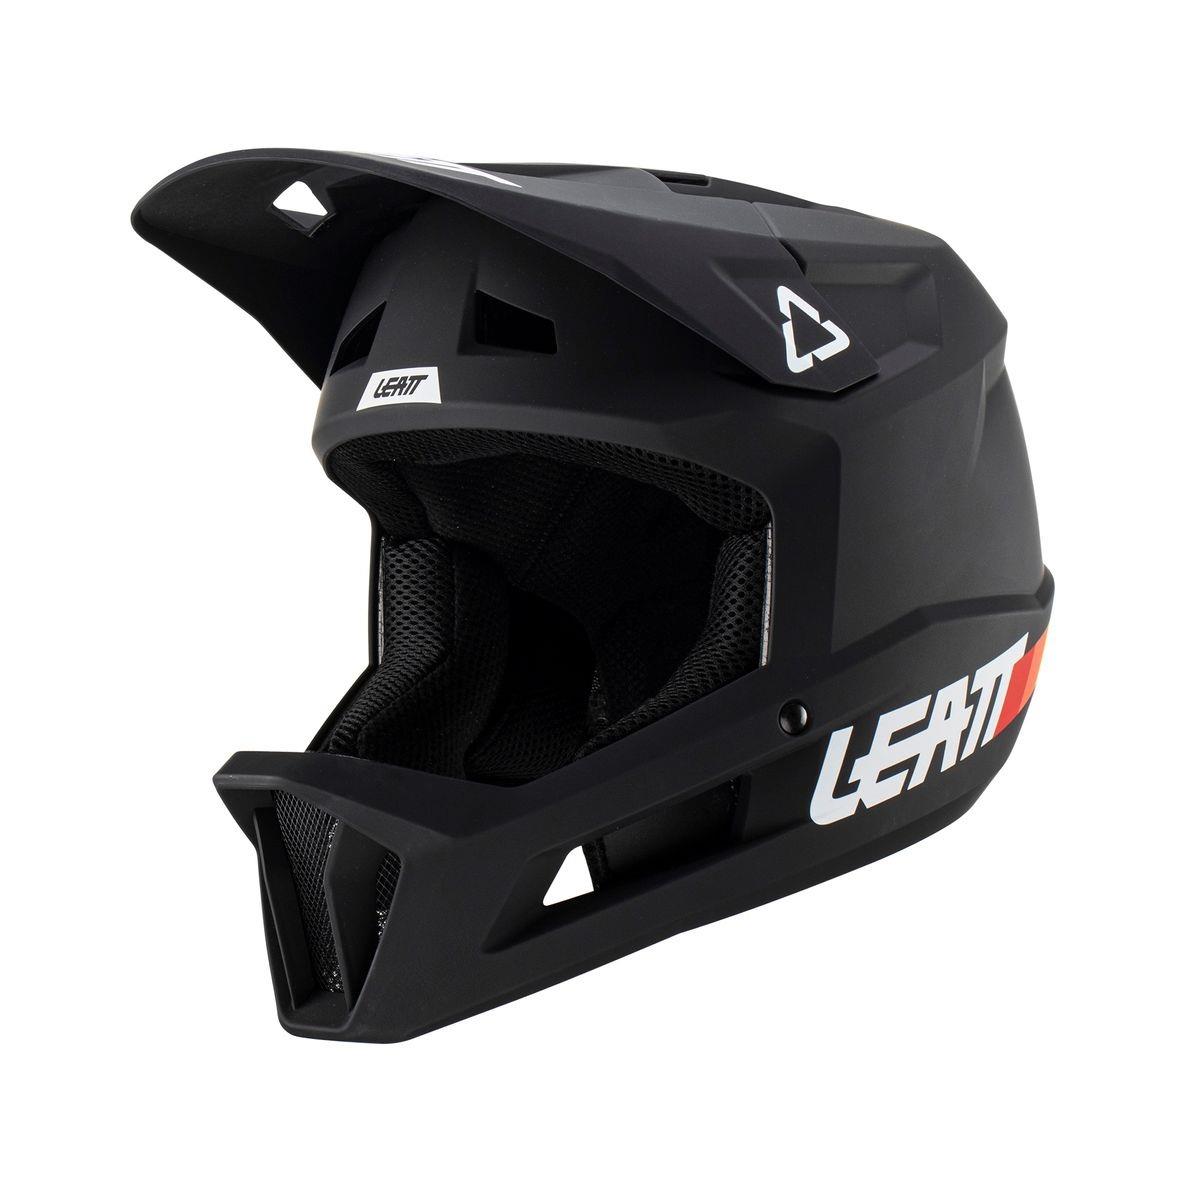 Gravity 1.0 MTB Fullface Helmet Stealth Black Size XS (53-54cm)